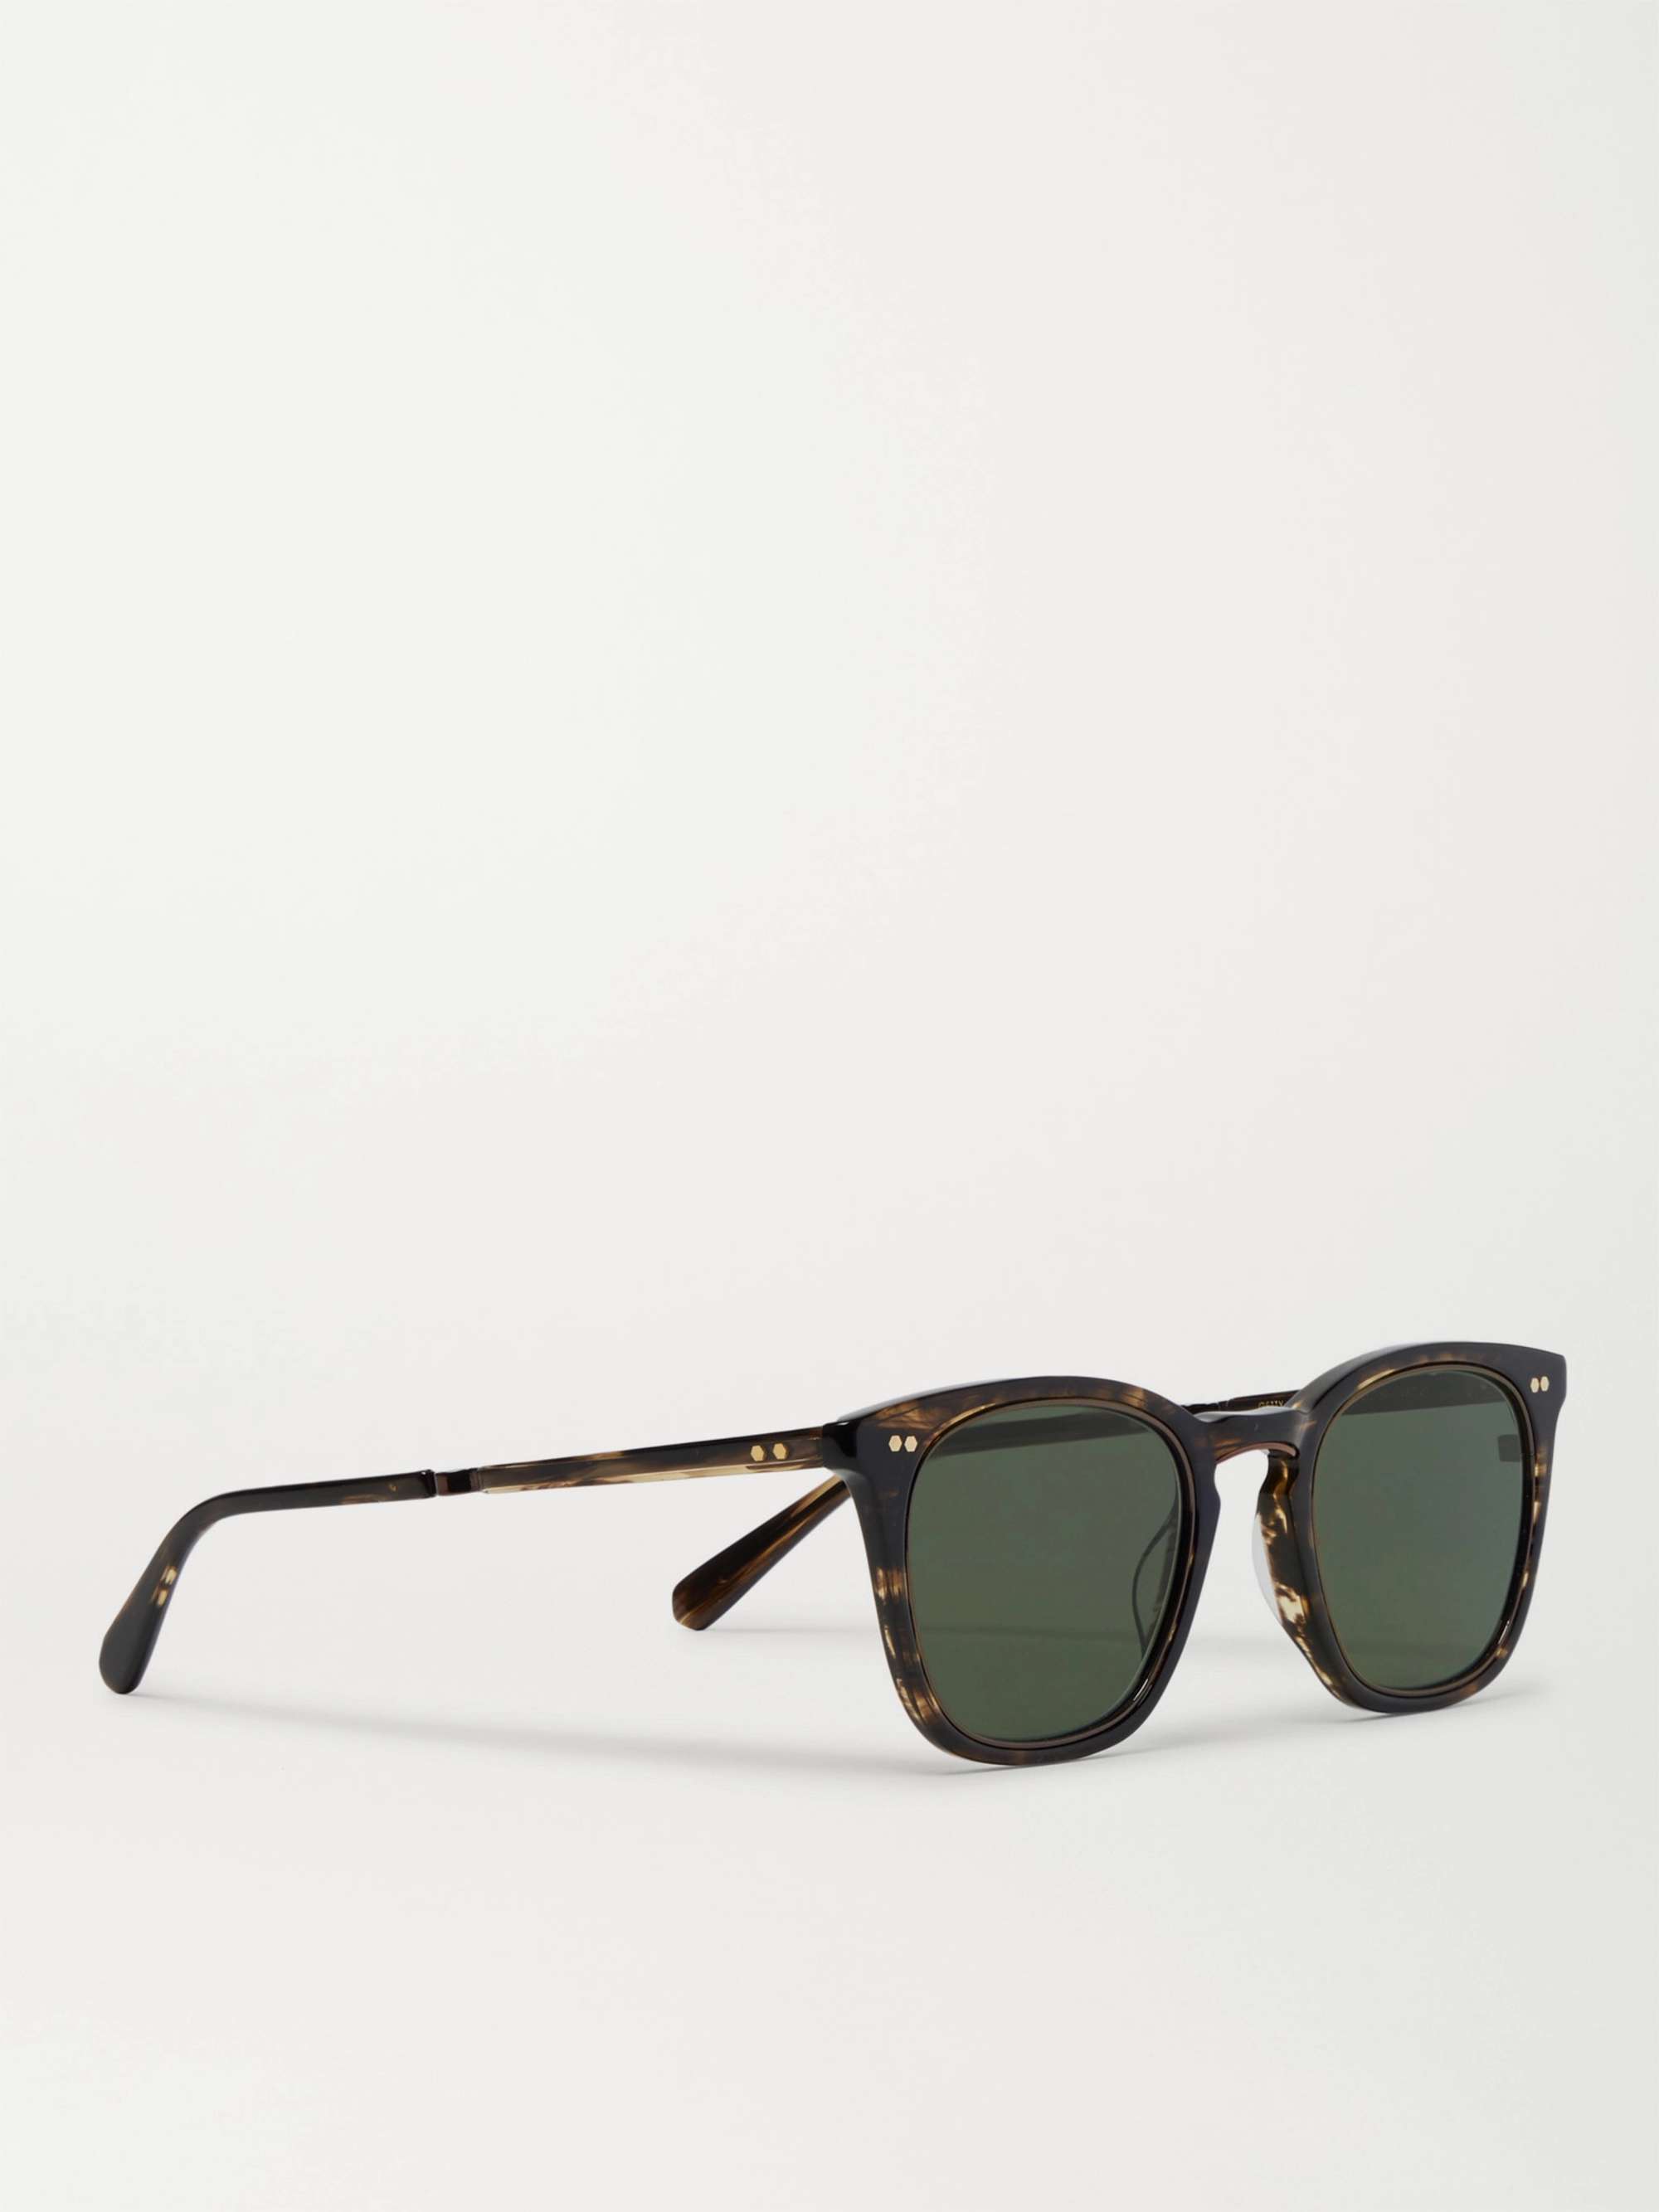 MR LEIGHT Getty S Square-Frame Tortoiseshell Acetate Sunglasses